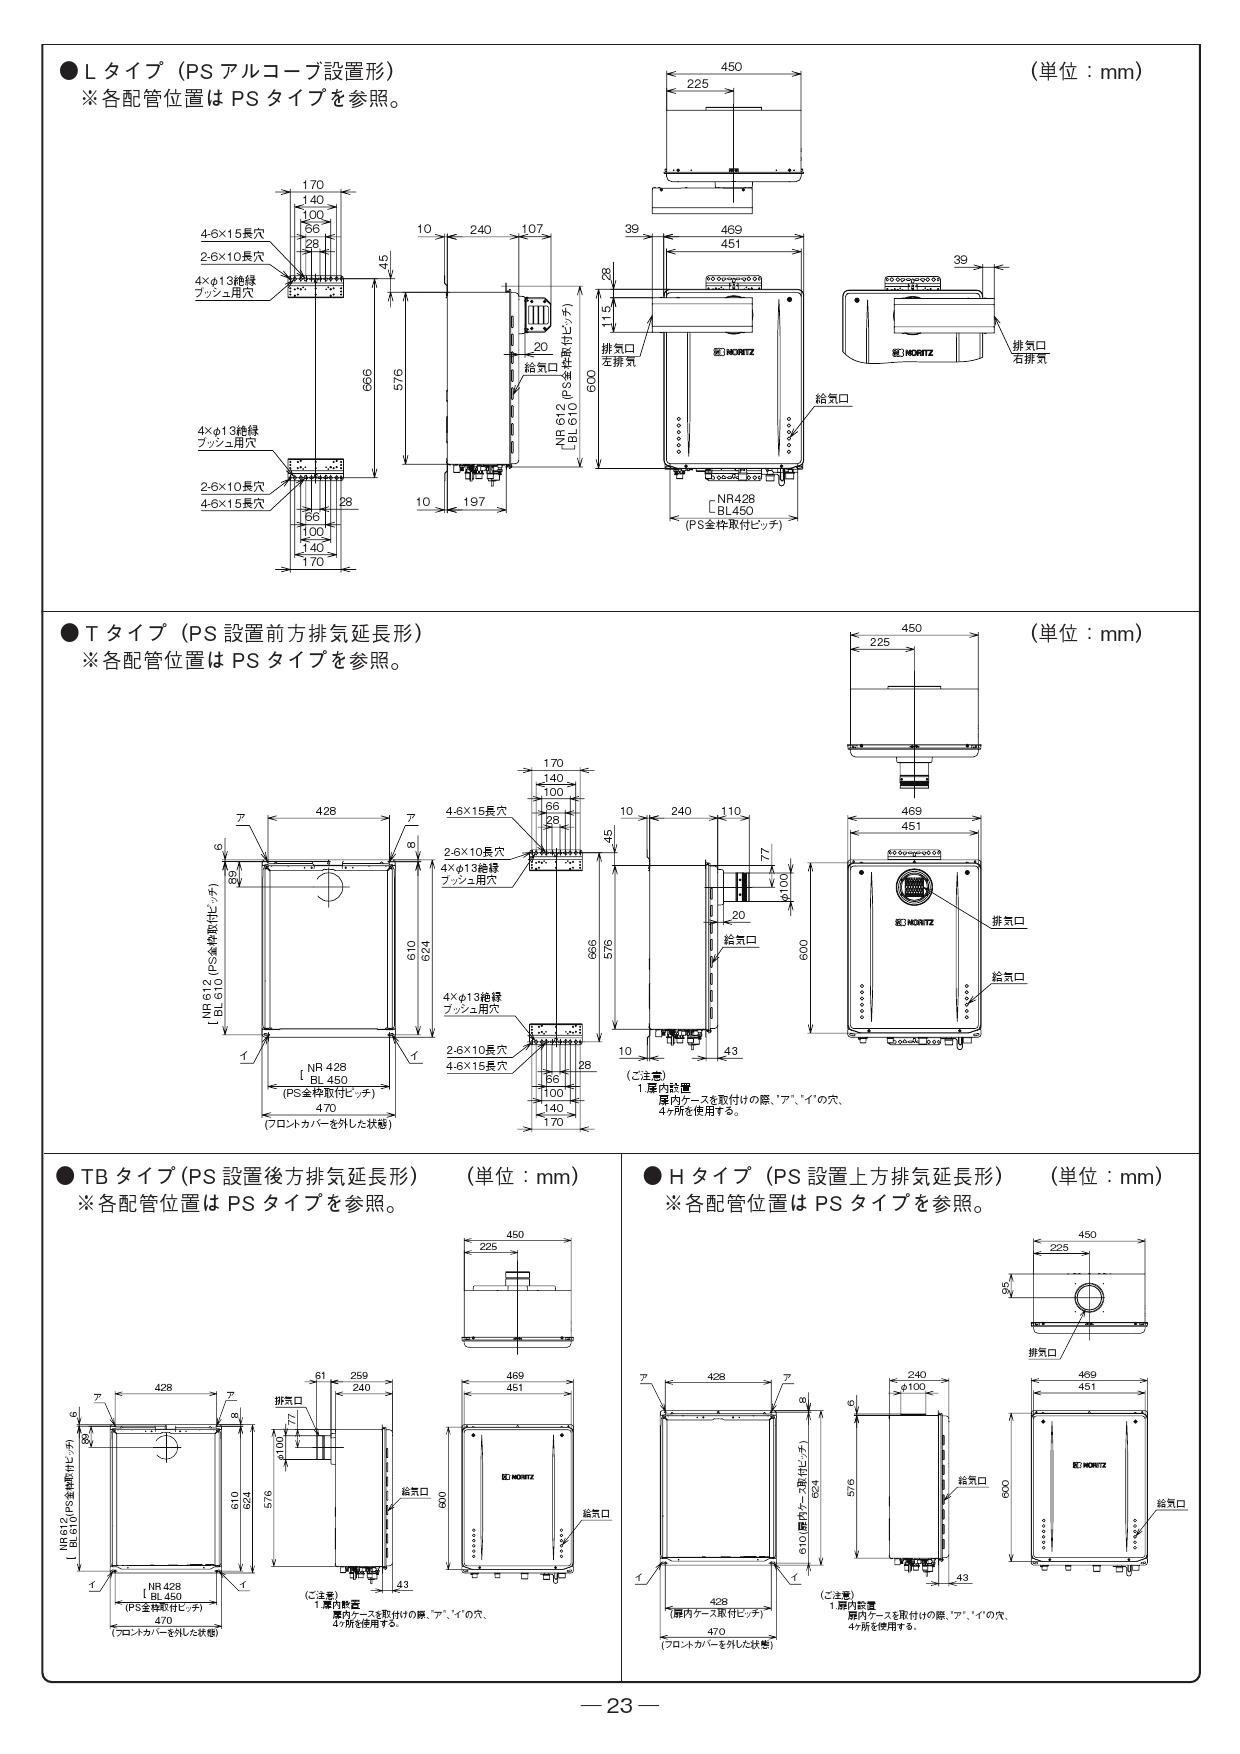  《KJK》 ノーリツ ガスふろ給湯器 ドレンアップ方式 20号 PS扉内設置型前排気 エコジョーズ オート ωα0 - 2